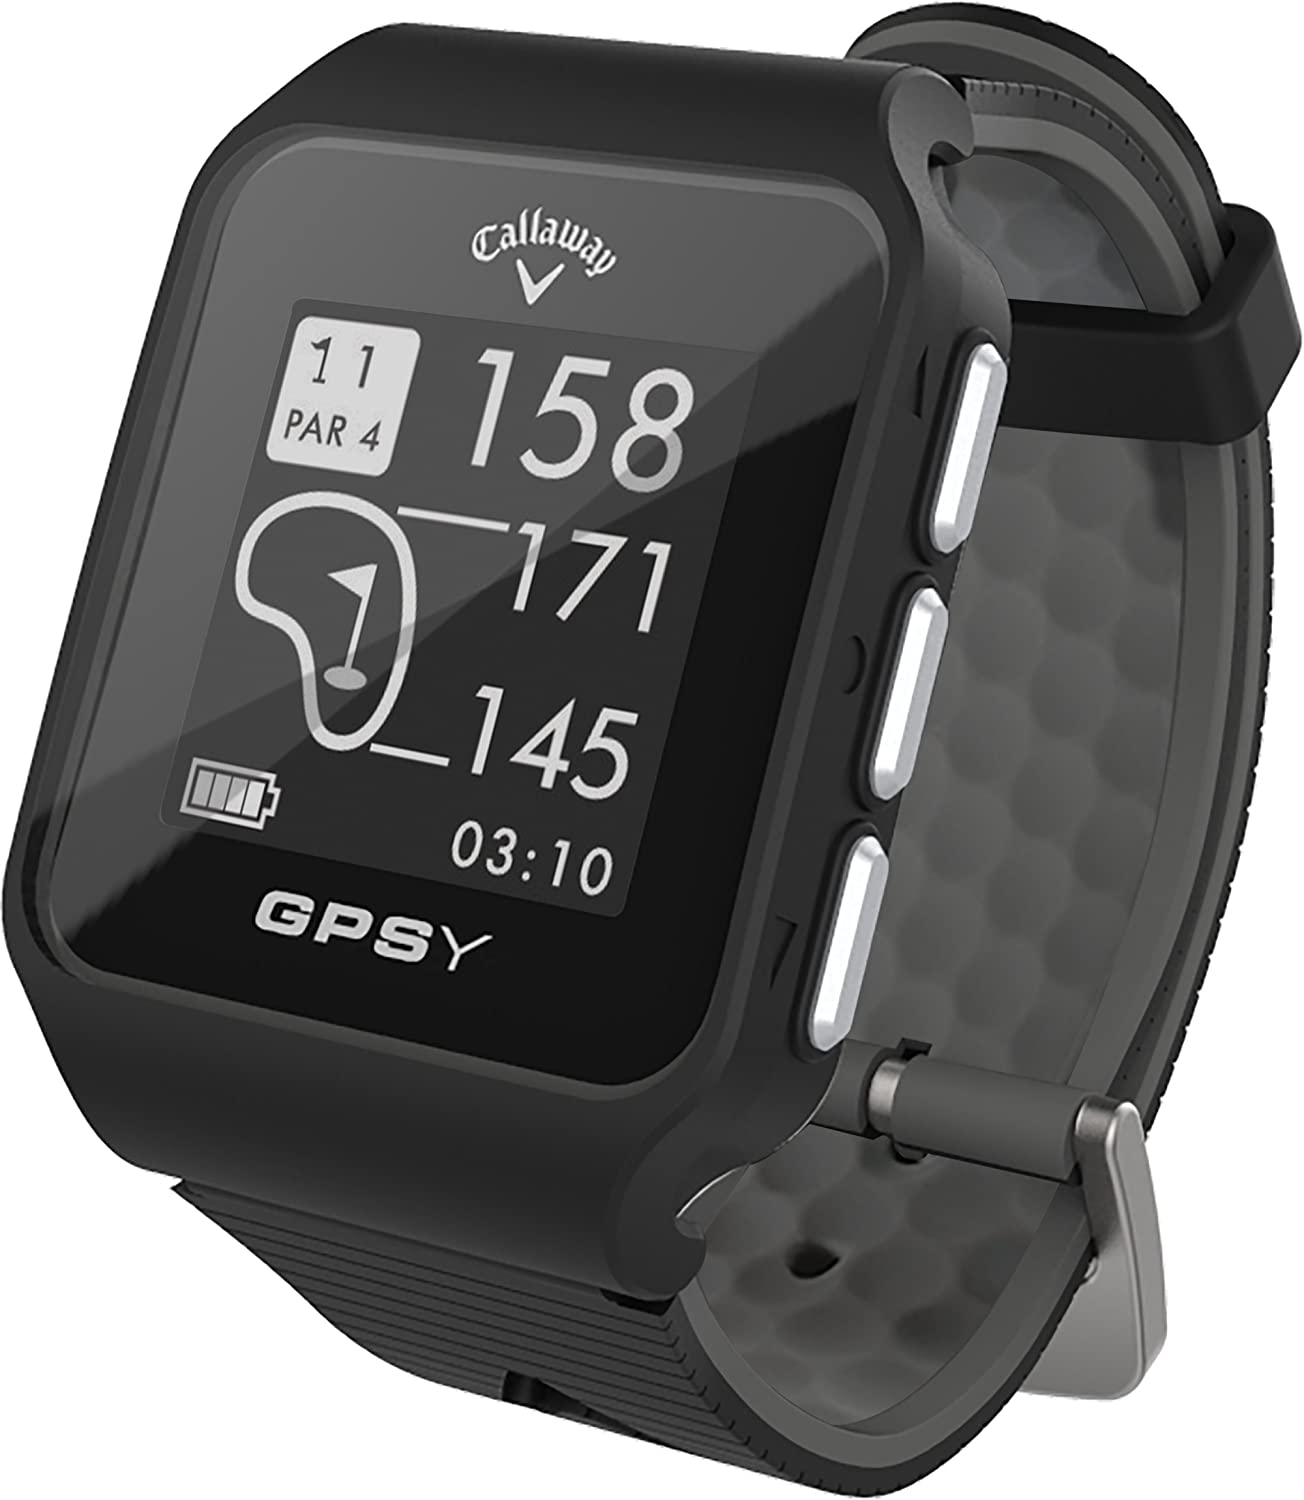 Callaway Mens GPSY Golf GPS Watch